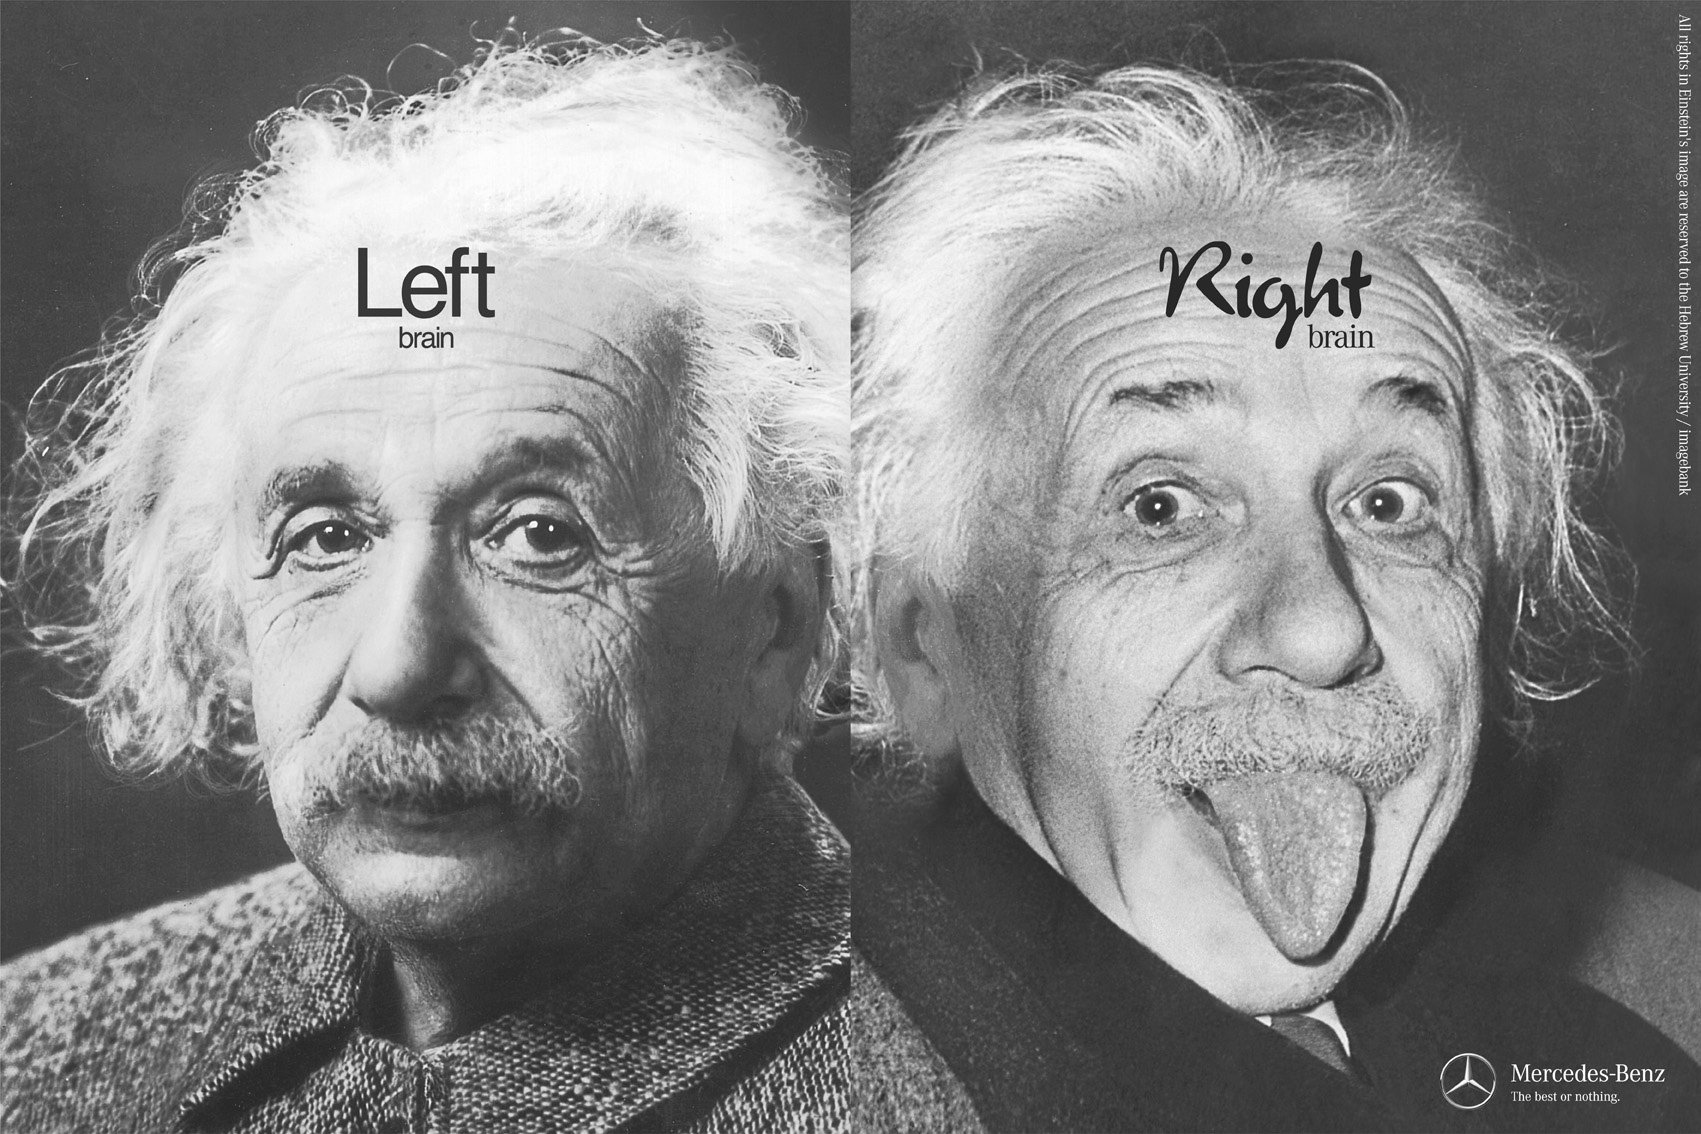 Эйнштейн как рекламный образ